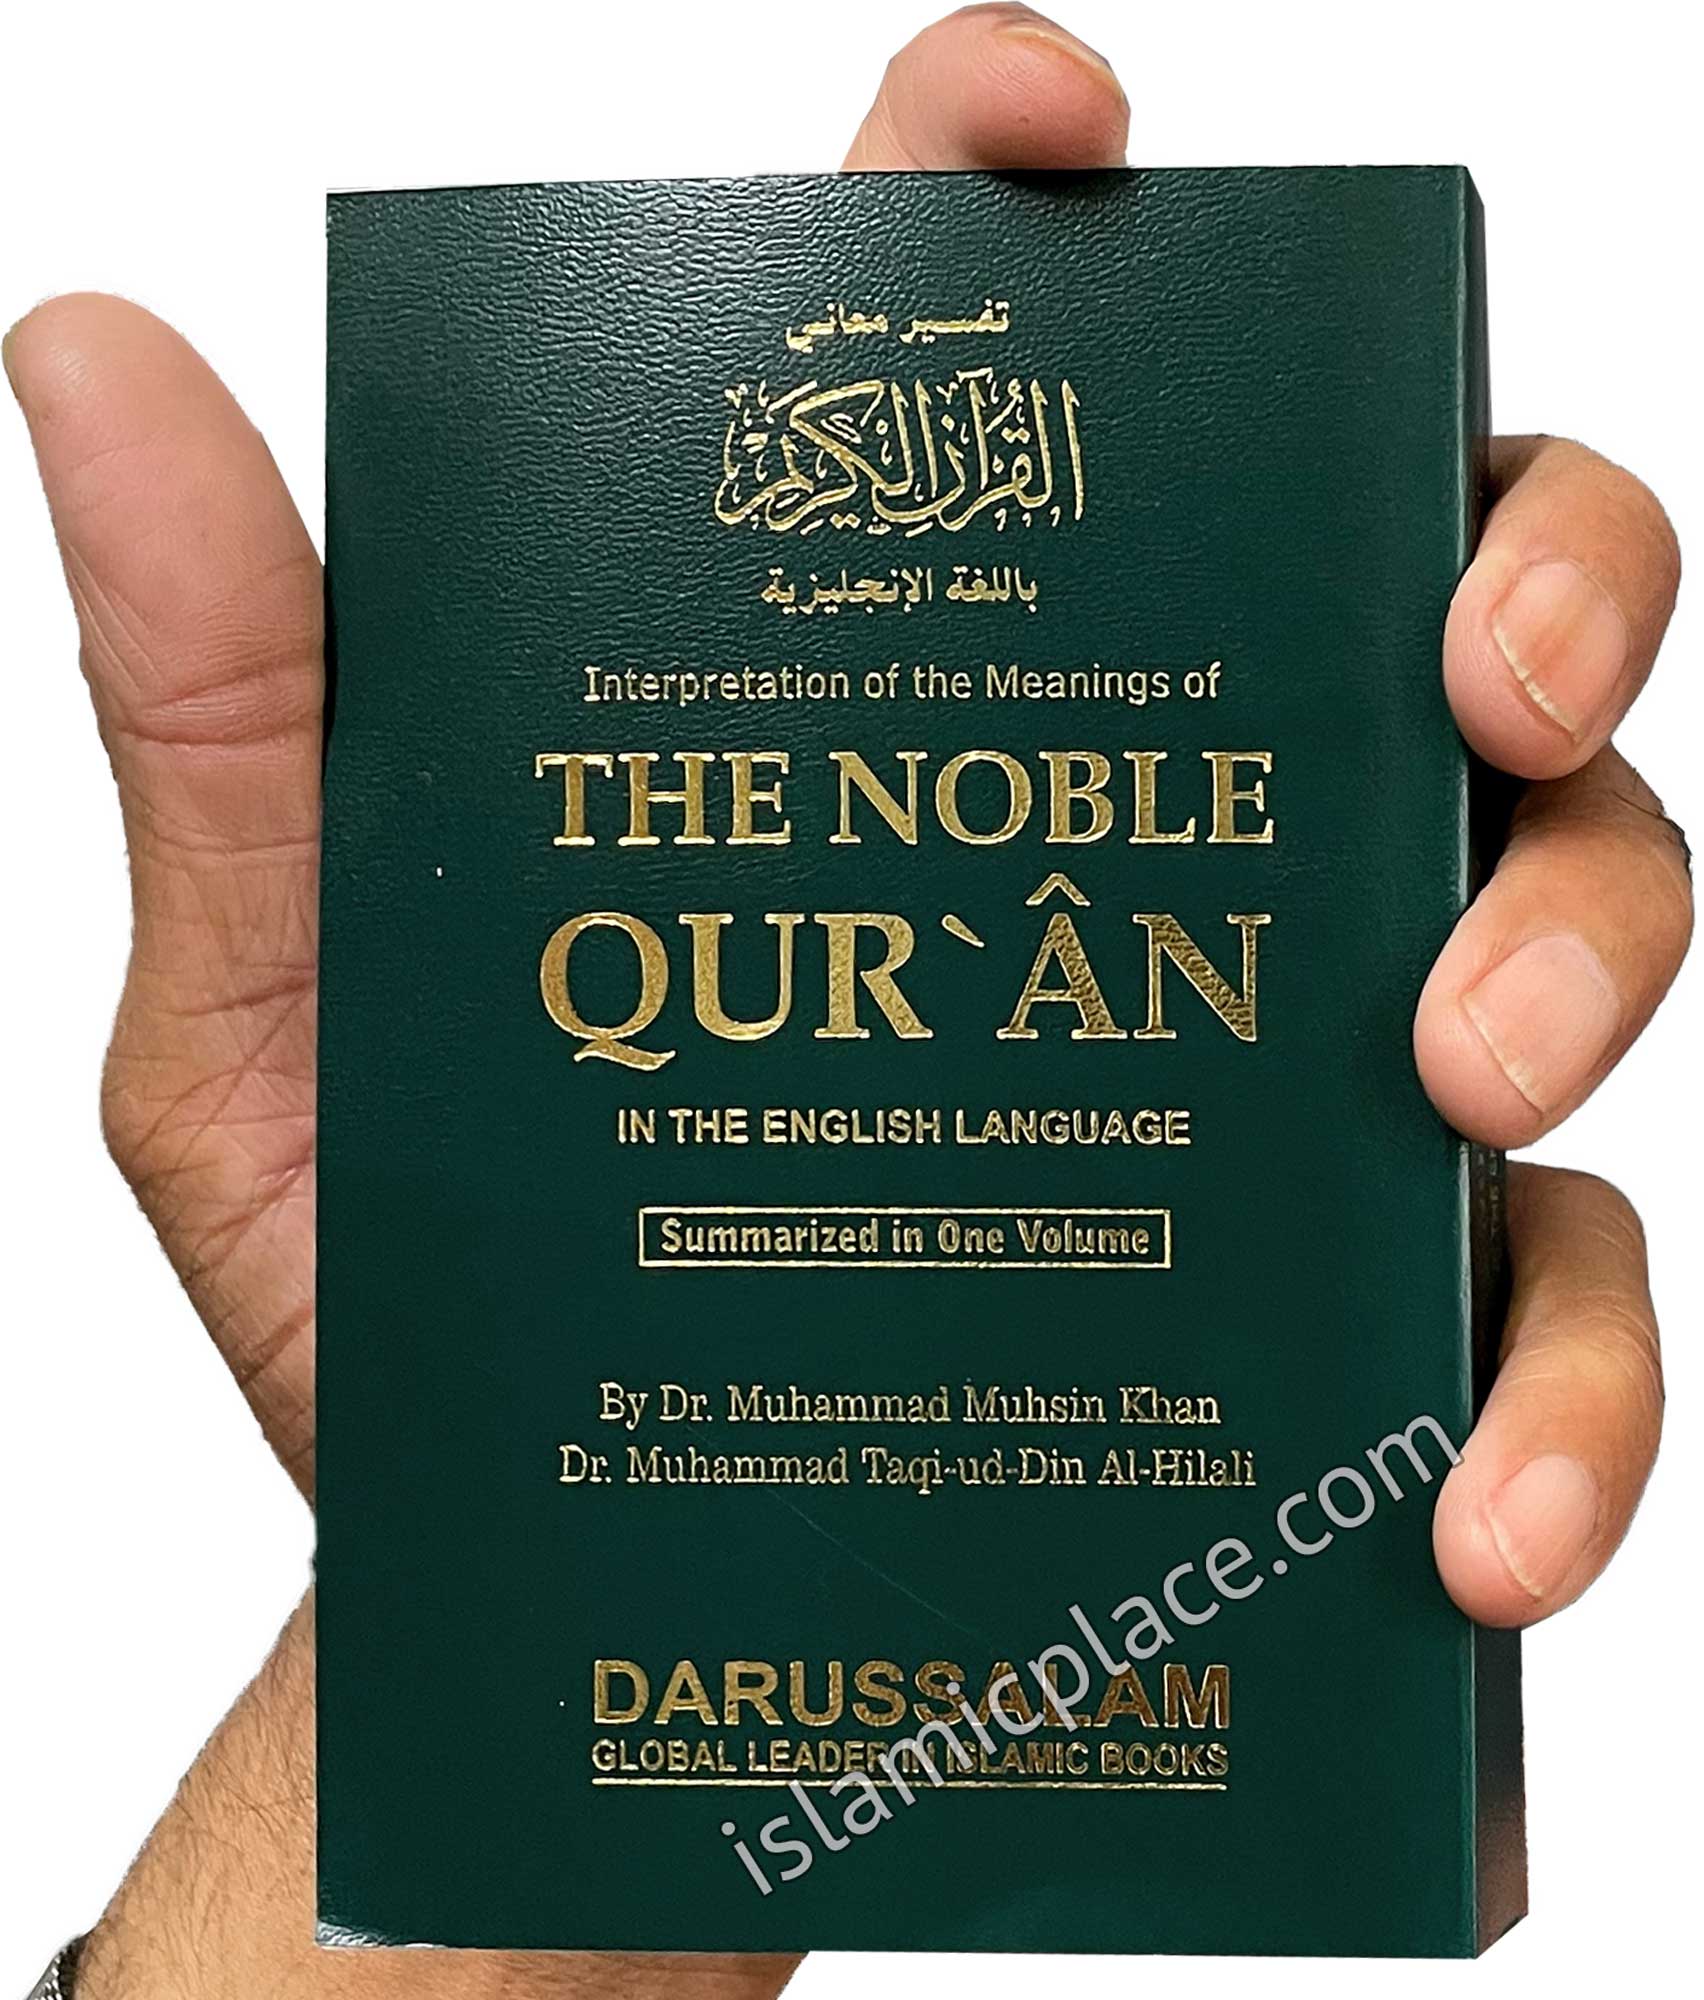 The Noble Quran - Soft cover in Medium Size - Arabic & English (4" x 6") Fine paper